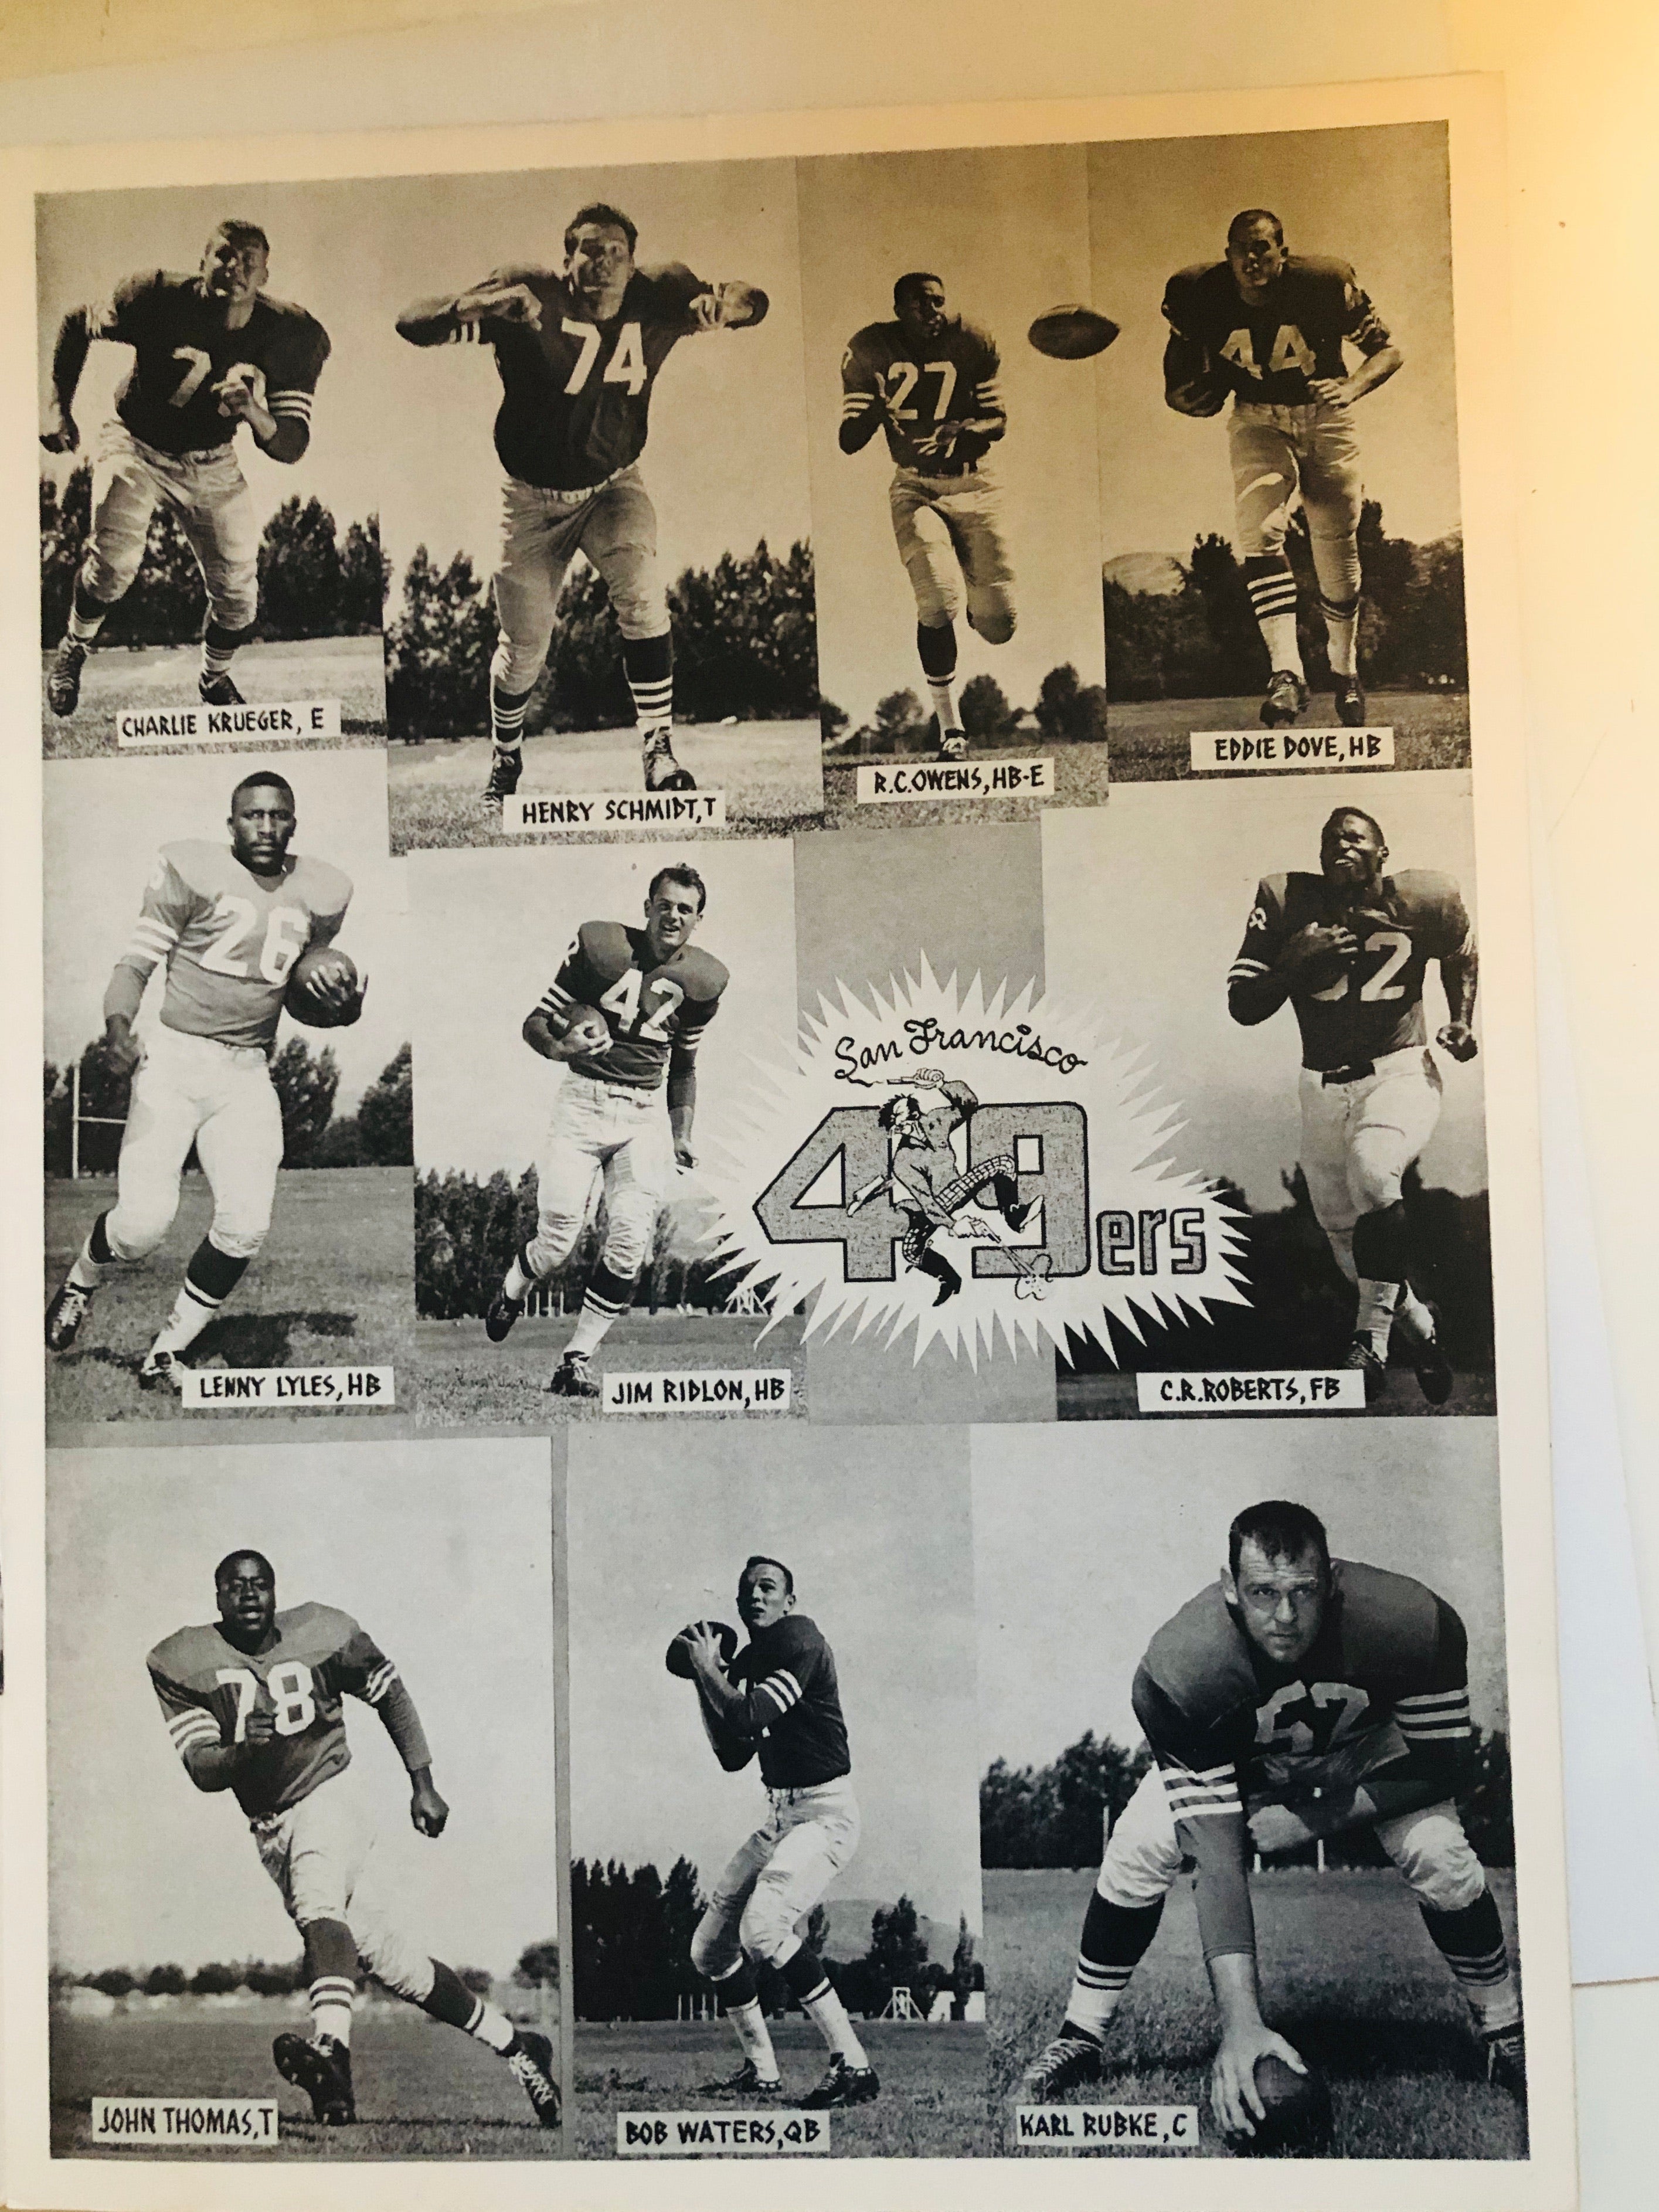 1960 football game program 49ers vs Lions